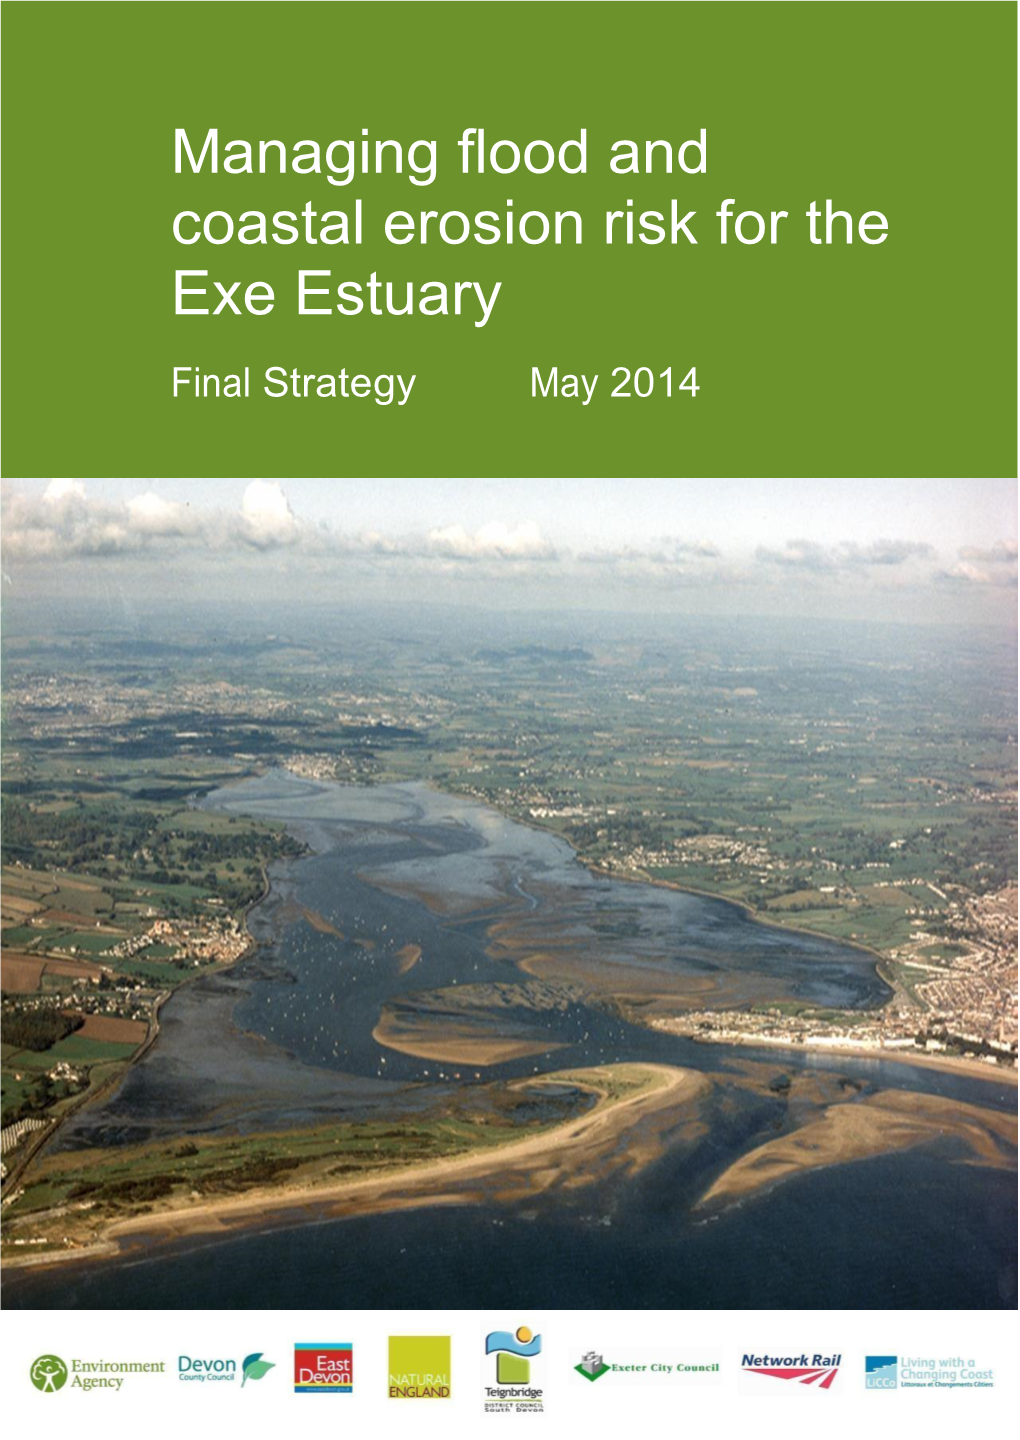 Managing Flood and Coastal Erosion Risk for the Exe Estuary